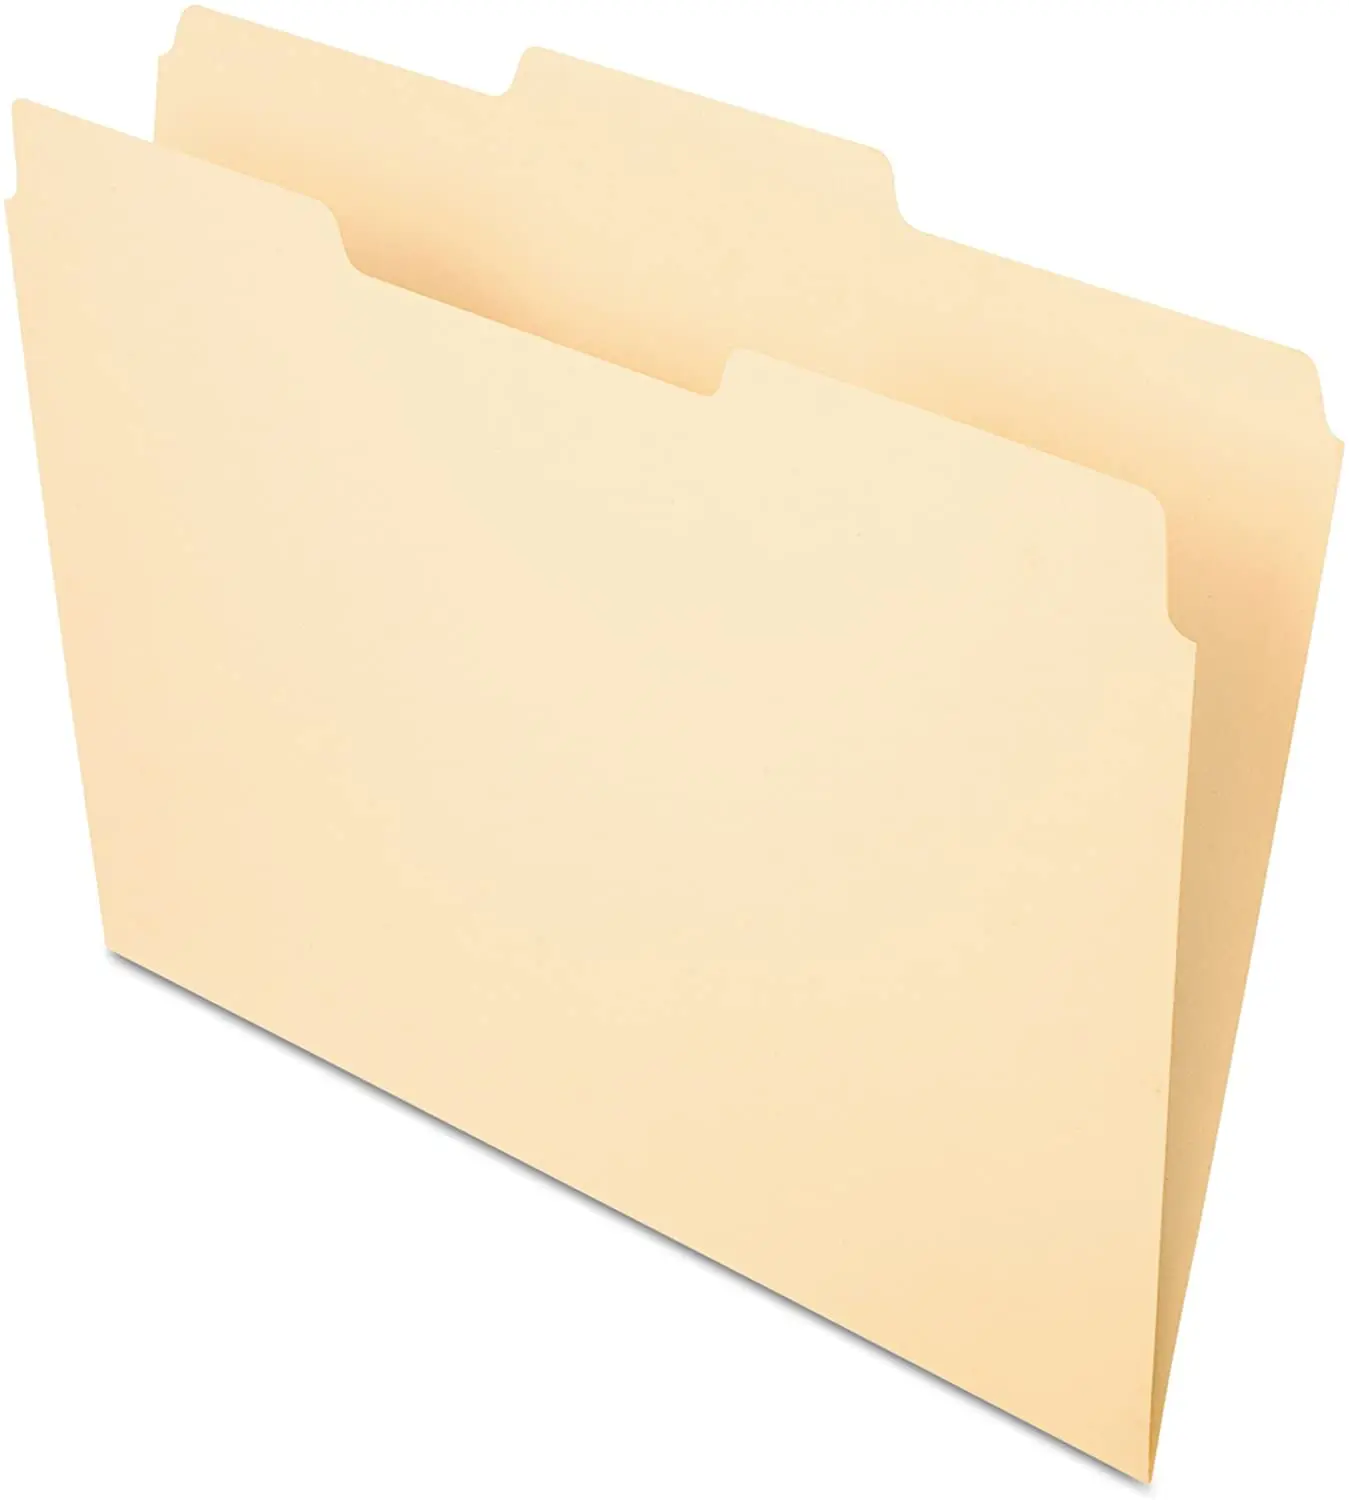 manila folders.jpg